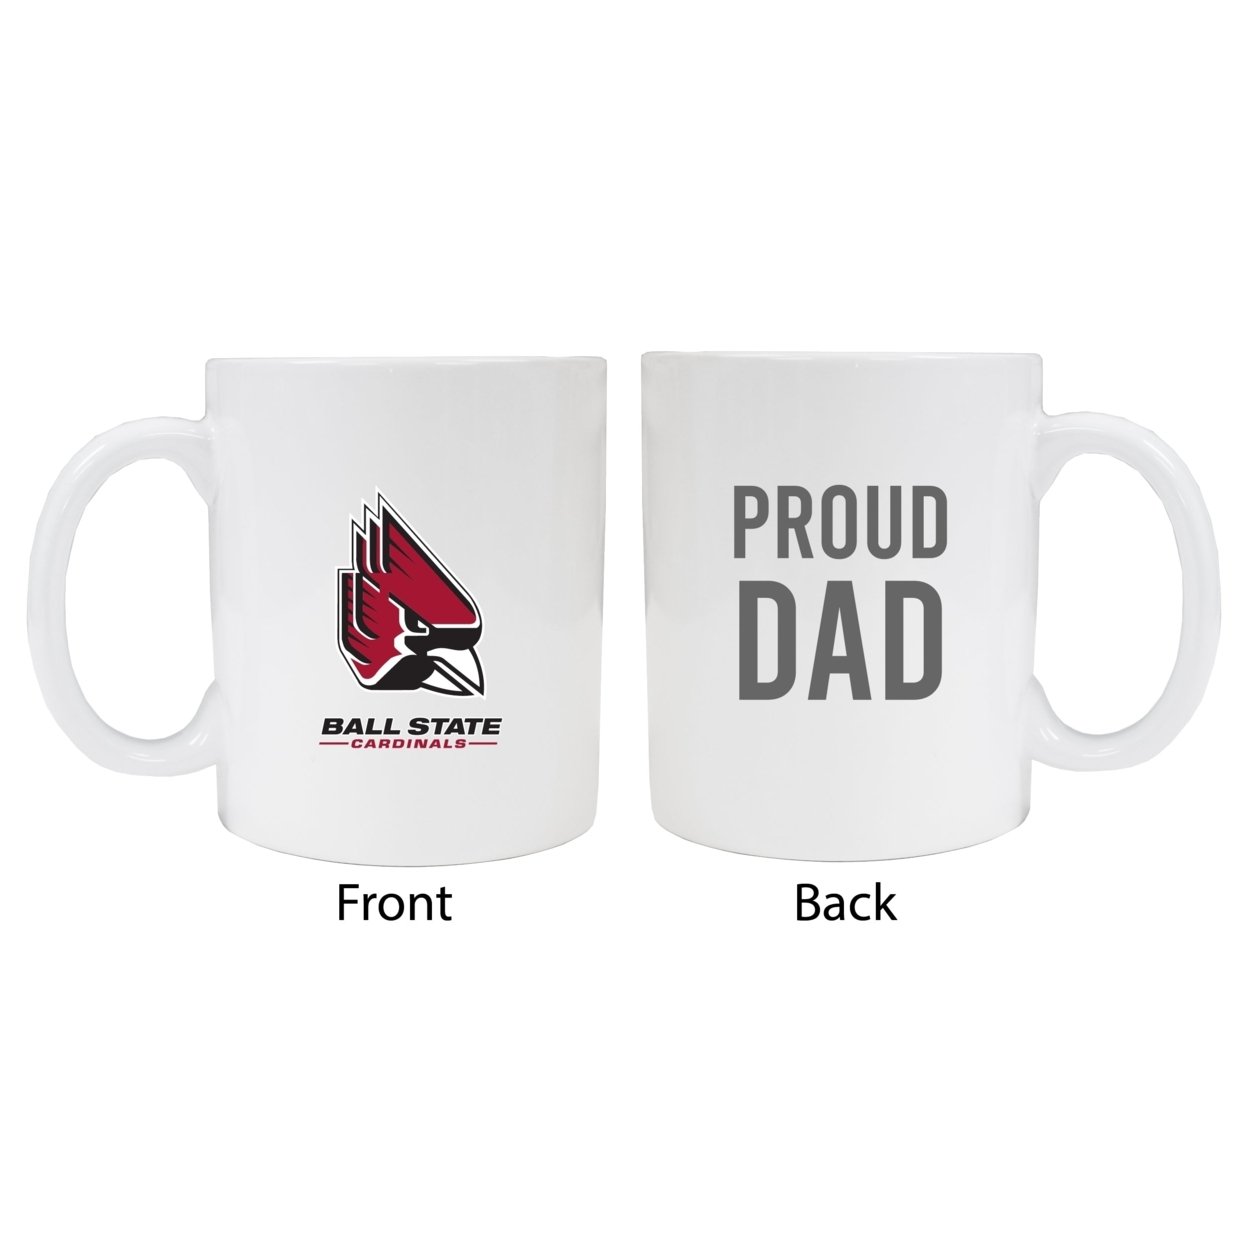 Ball State University Proud Dad Ceramic Coffee Mug - White